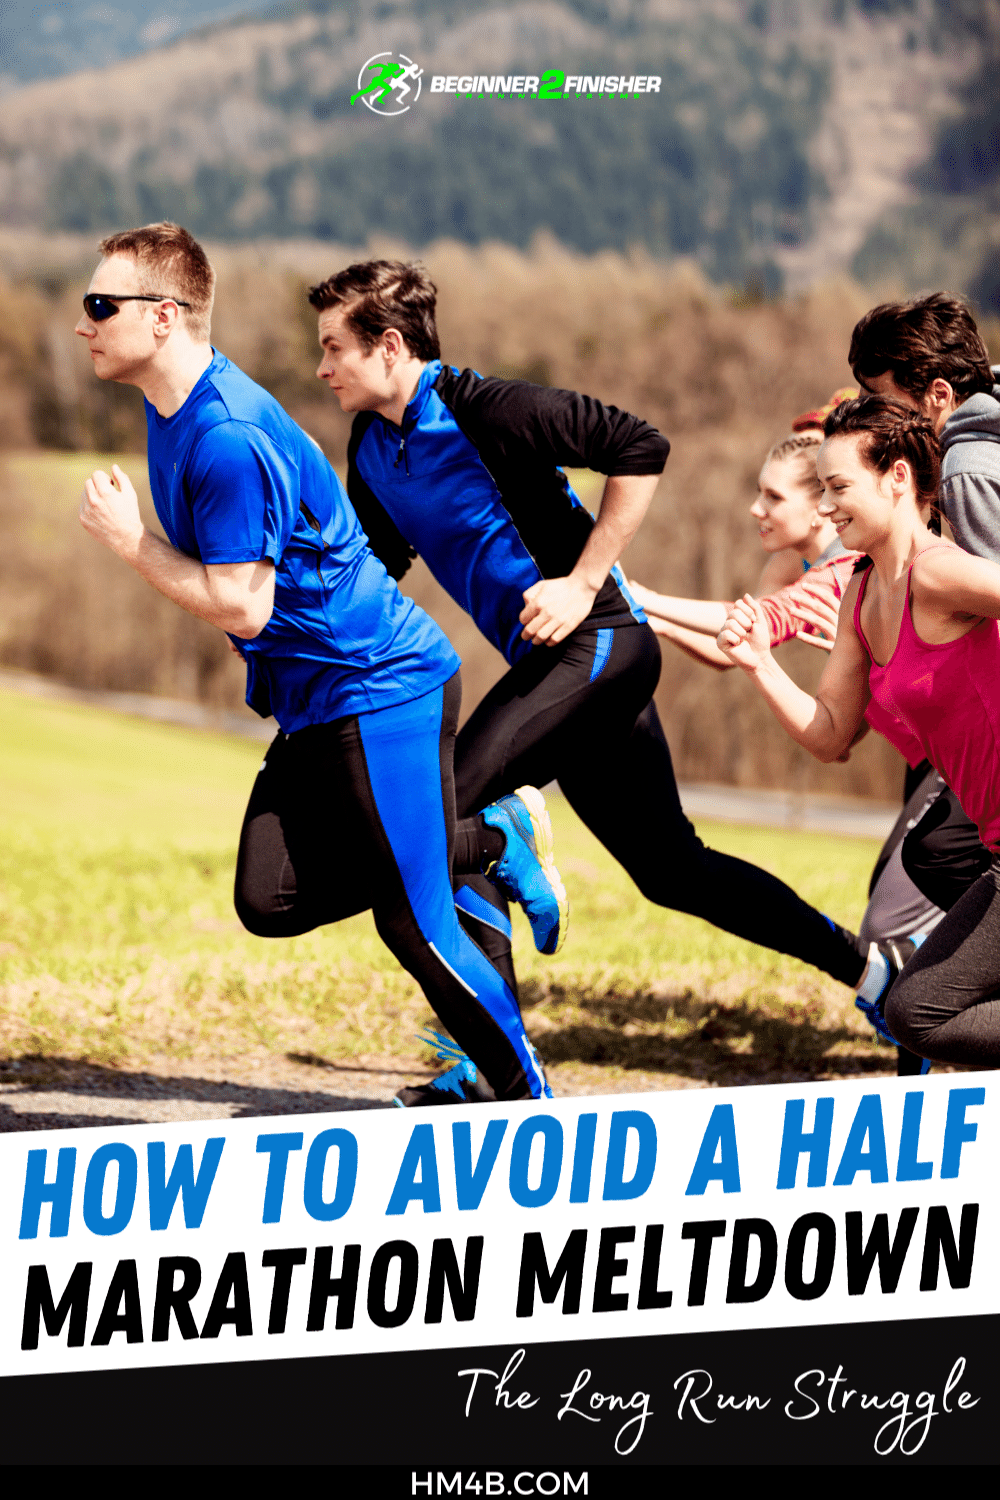 How to Avoid a Half Marathon Meltdown - The Long Run Struggle